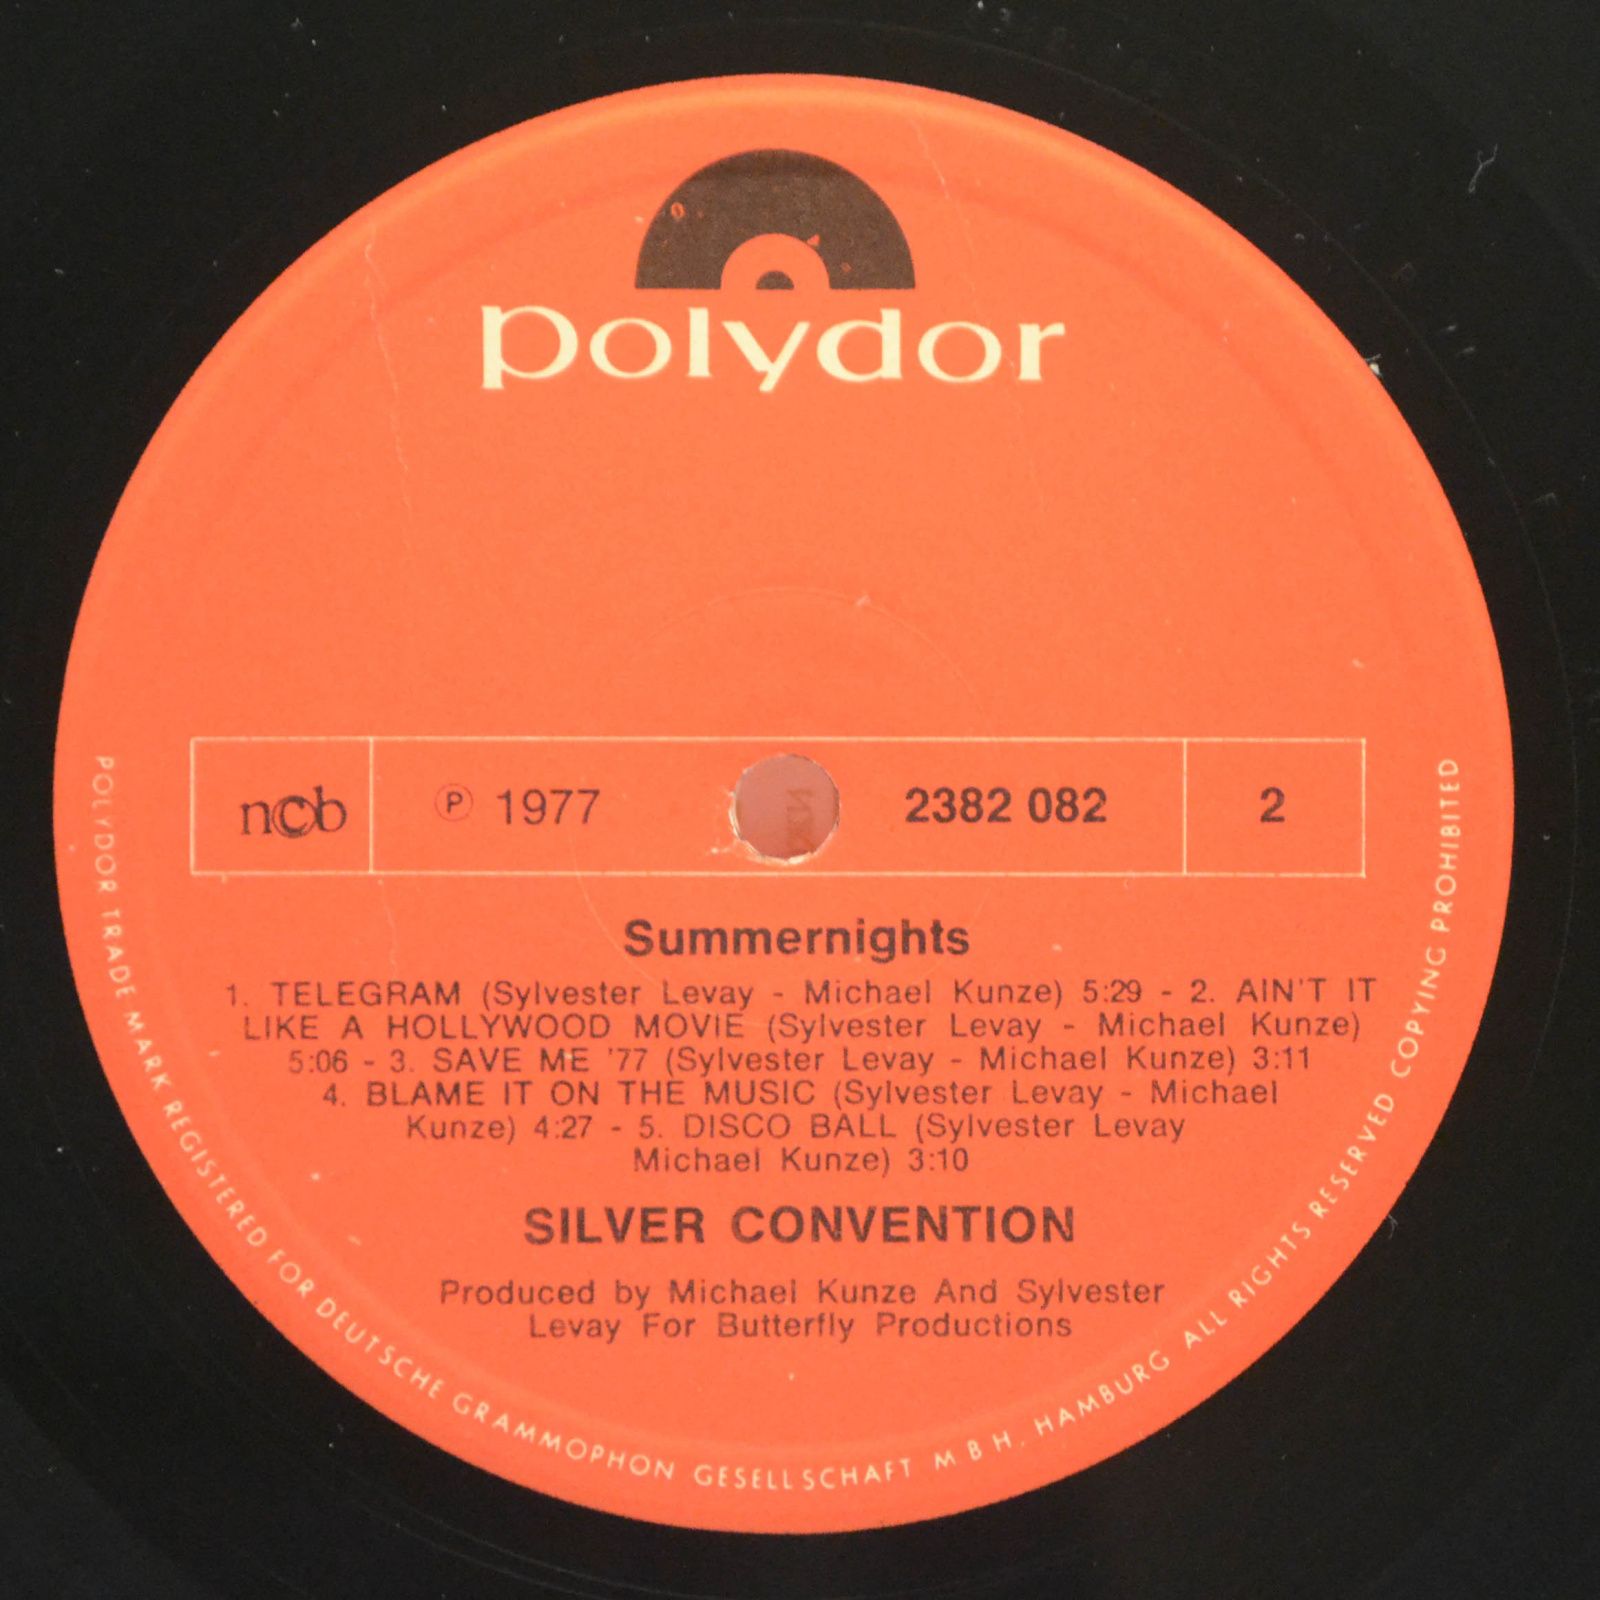 Silver Convention — Summernights, 1977